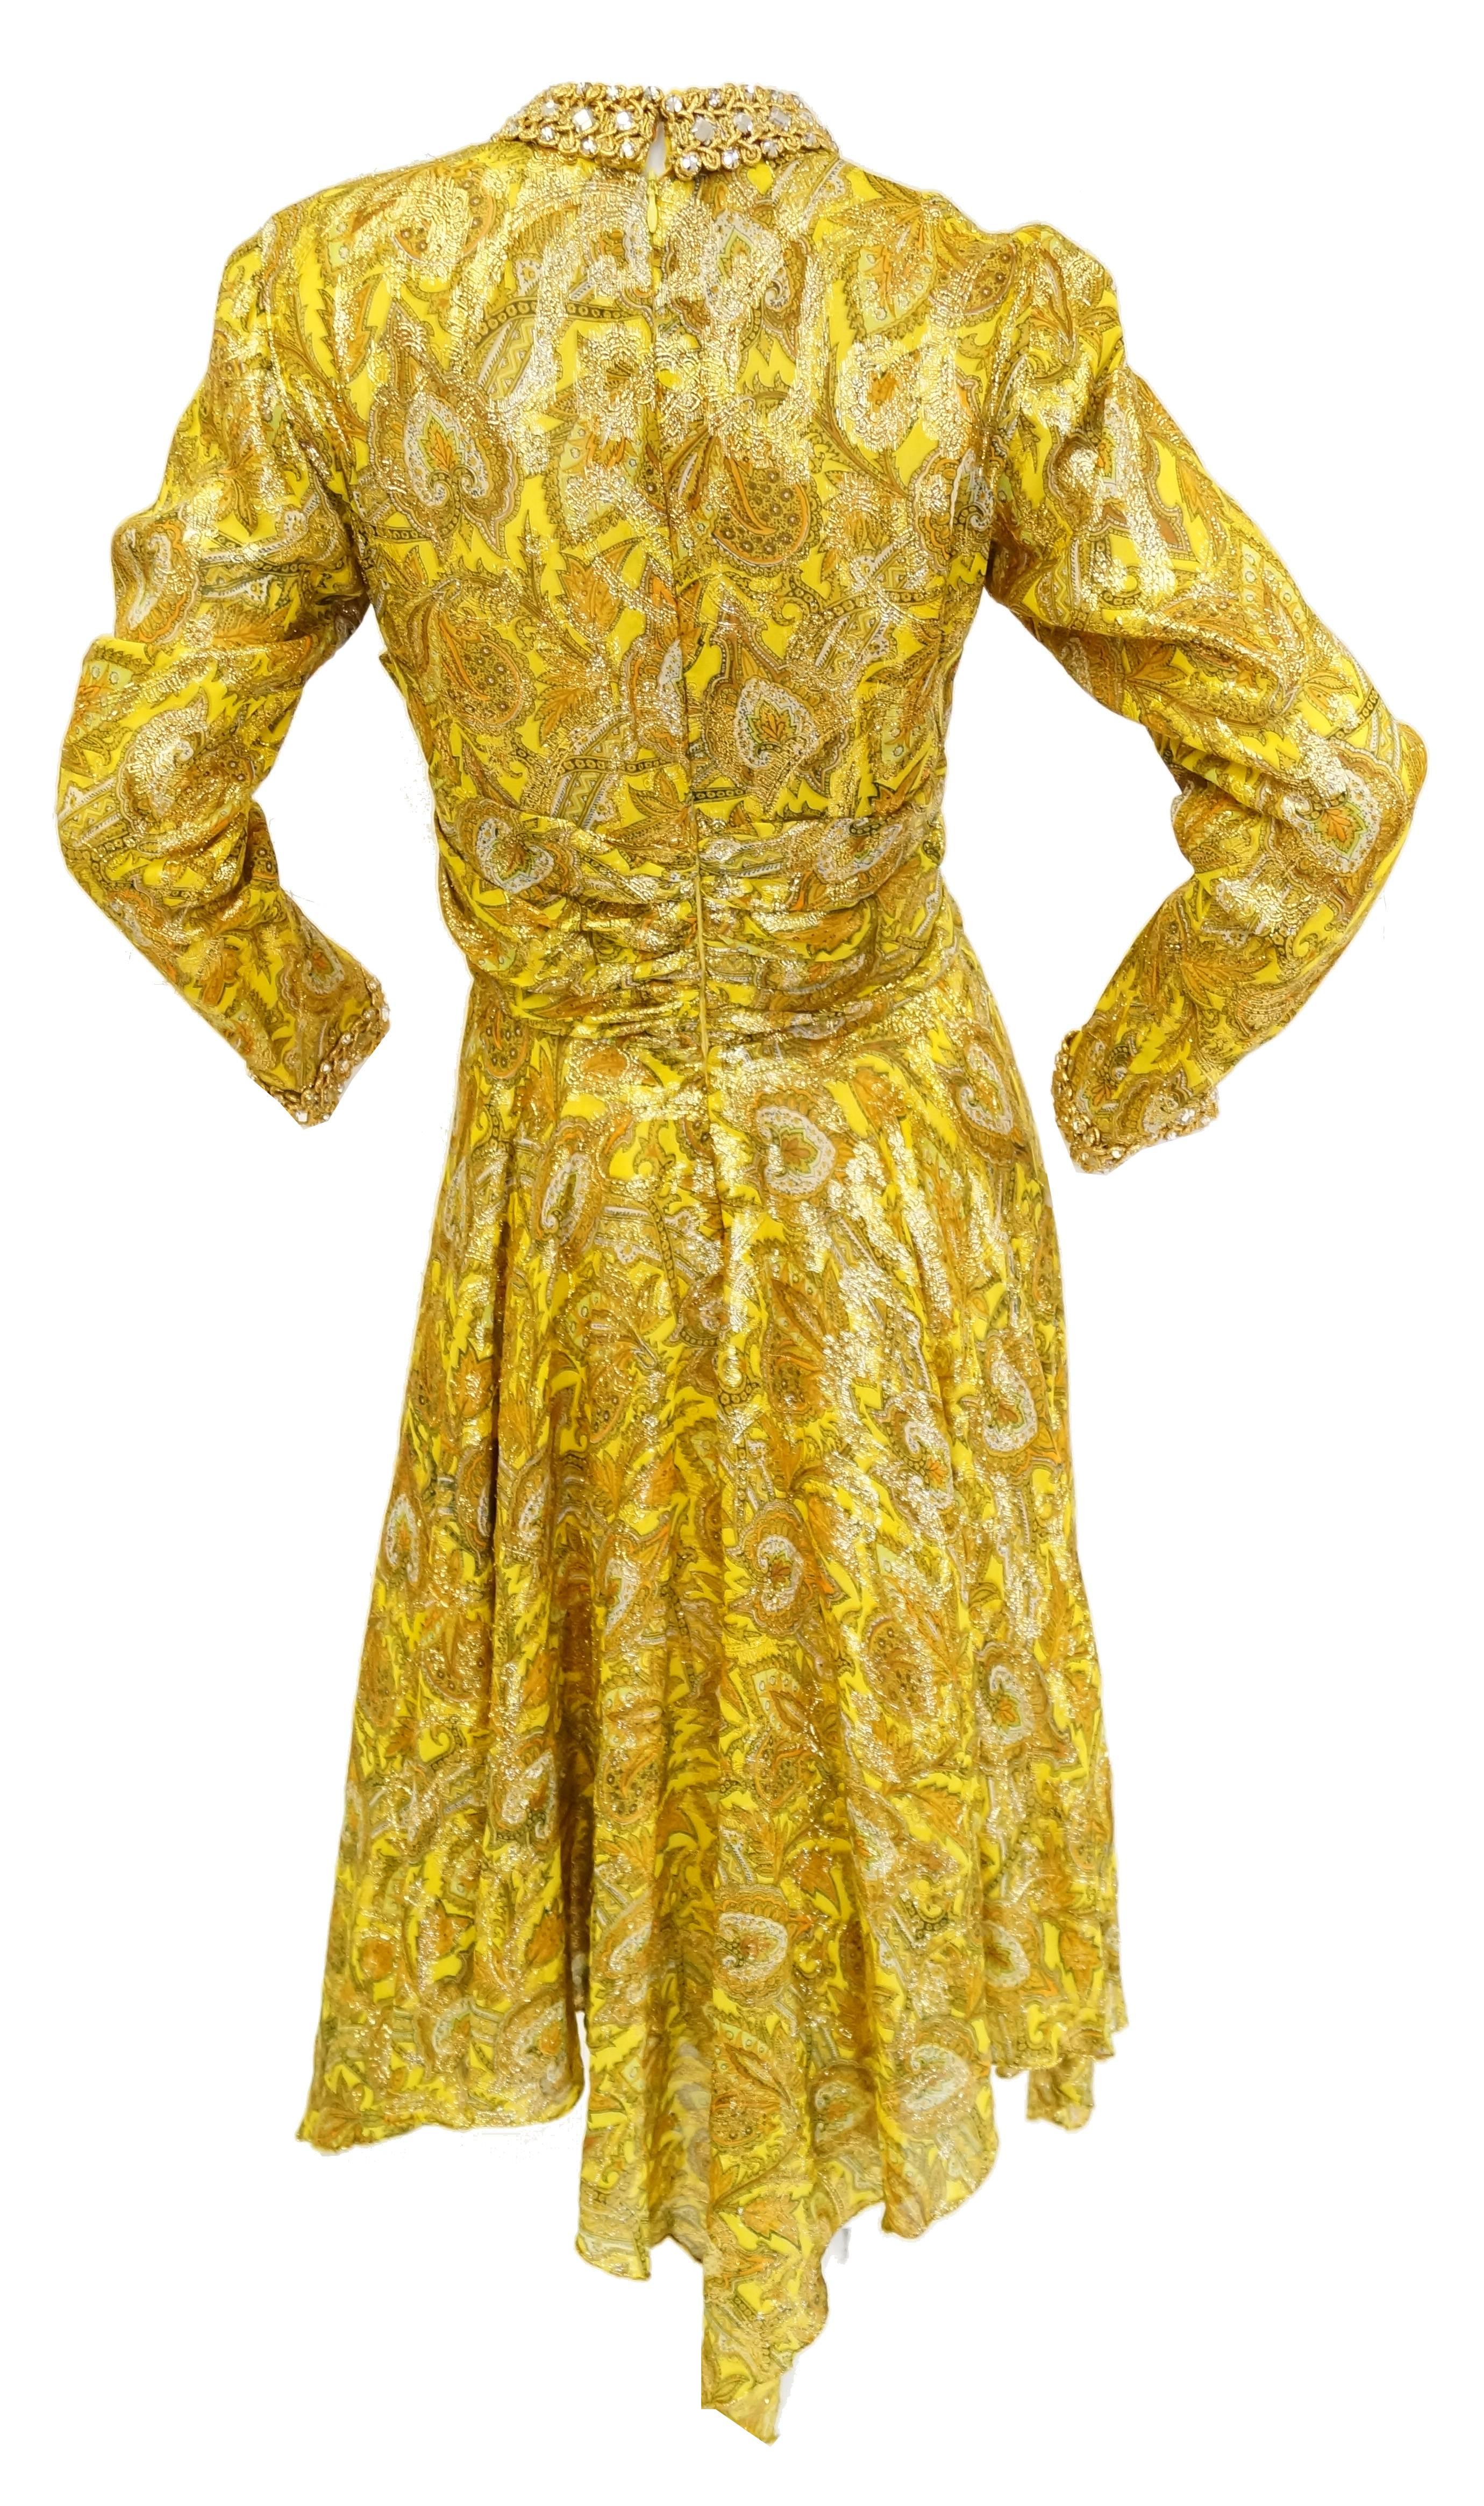 Women's 1960s Metallic Mod Dress w/ Rouching & Rhinestone Details